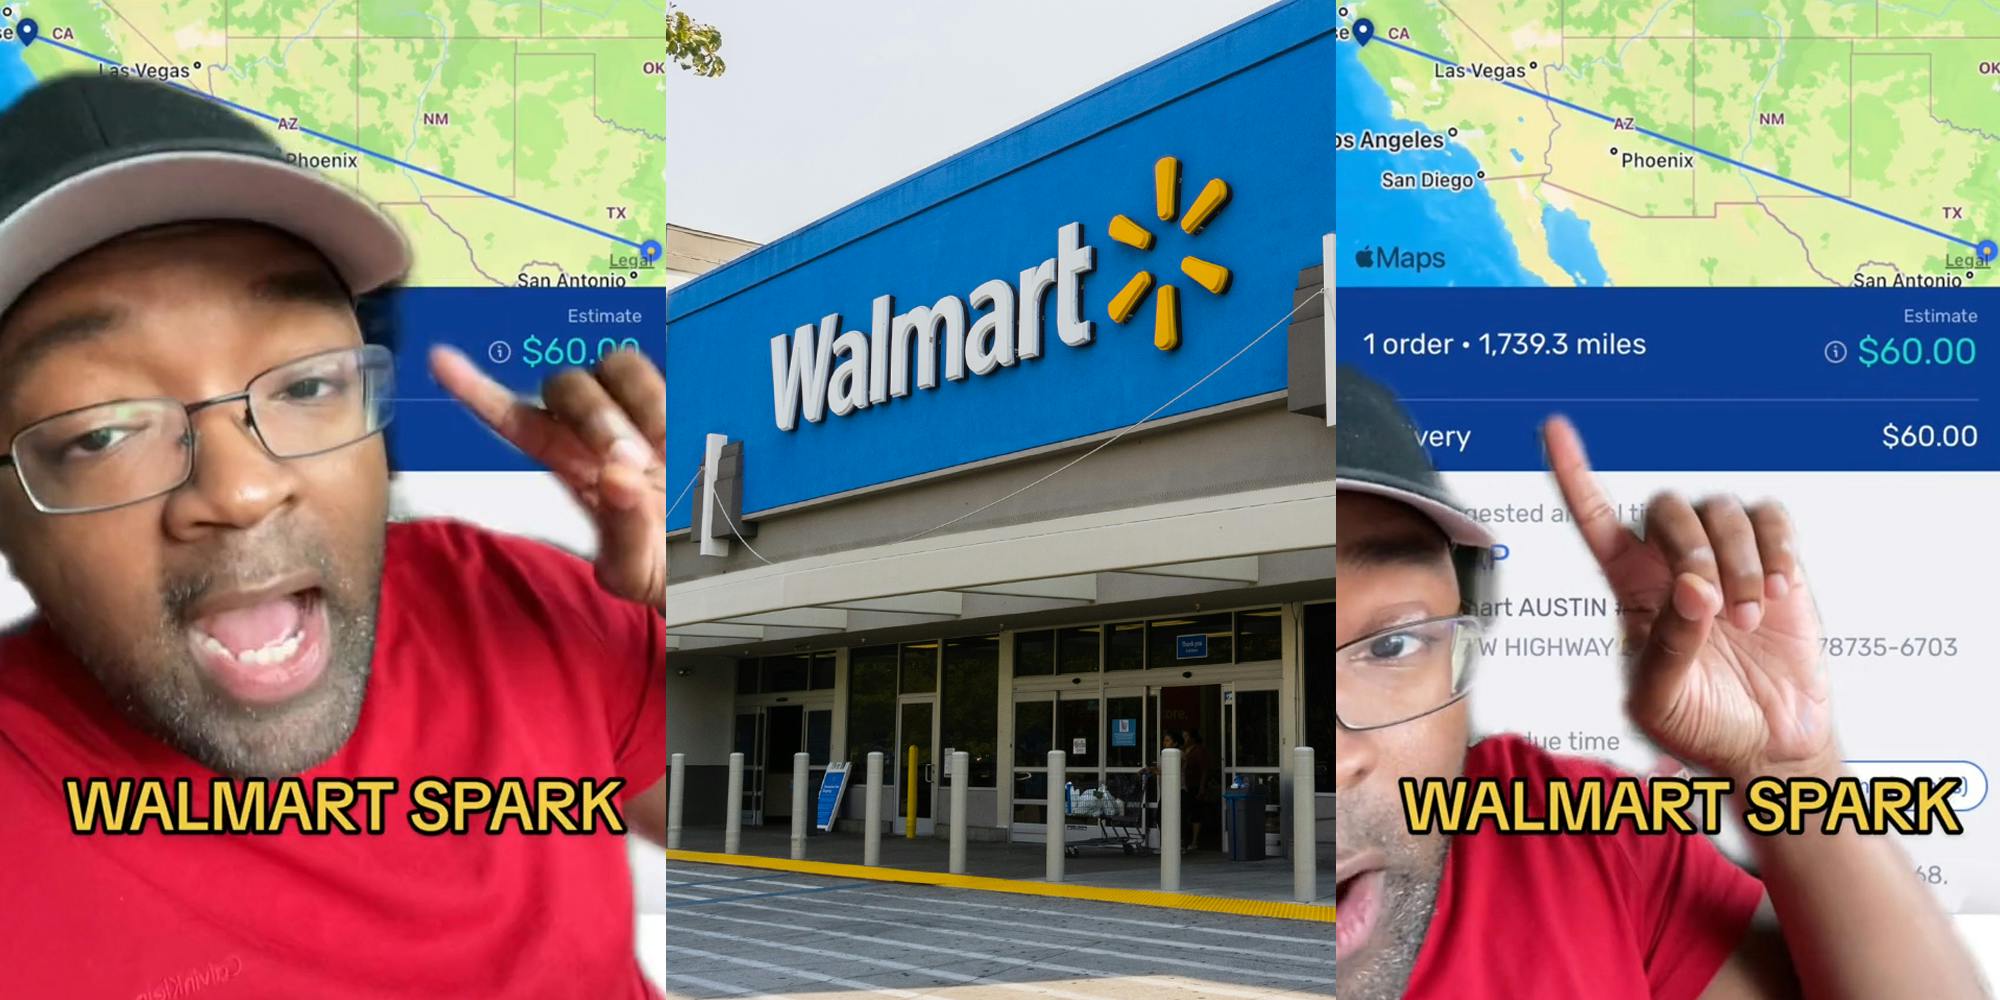 Spark delivery driver greenscreen TikTok over long distance order with caption "WALMART SPARK" (l) Walmart entrance with sign (c) Spark delivery driver greenscreen TikTok over long distance order with caption "WALMART SPARK" (r)